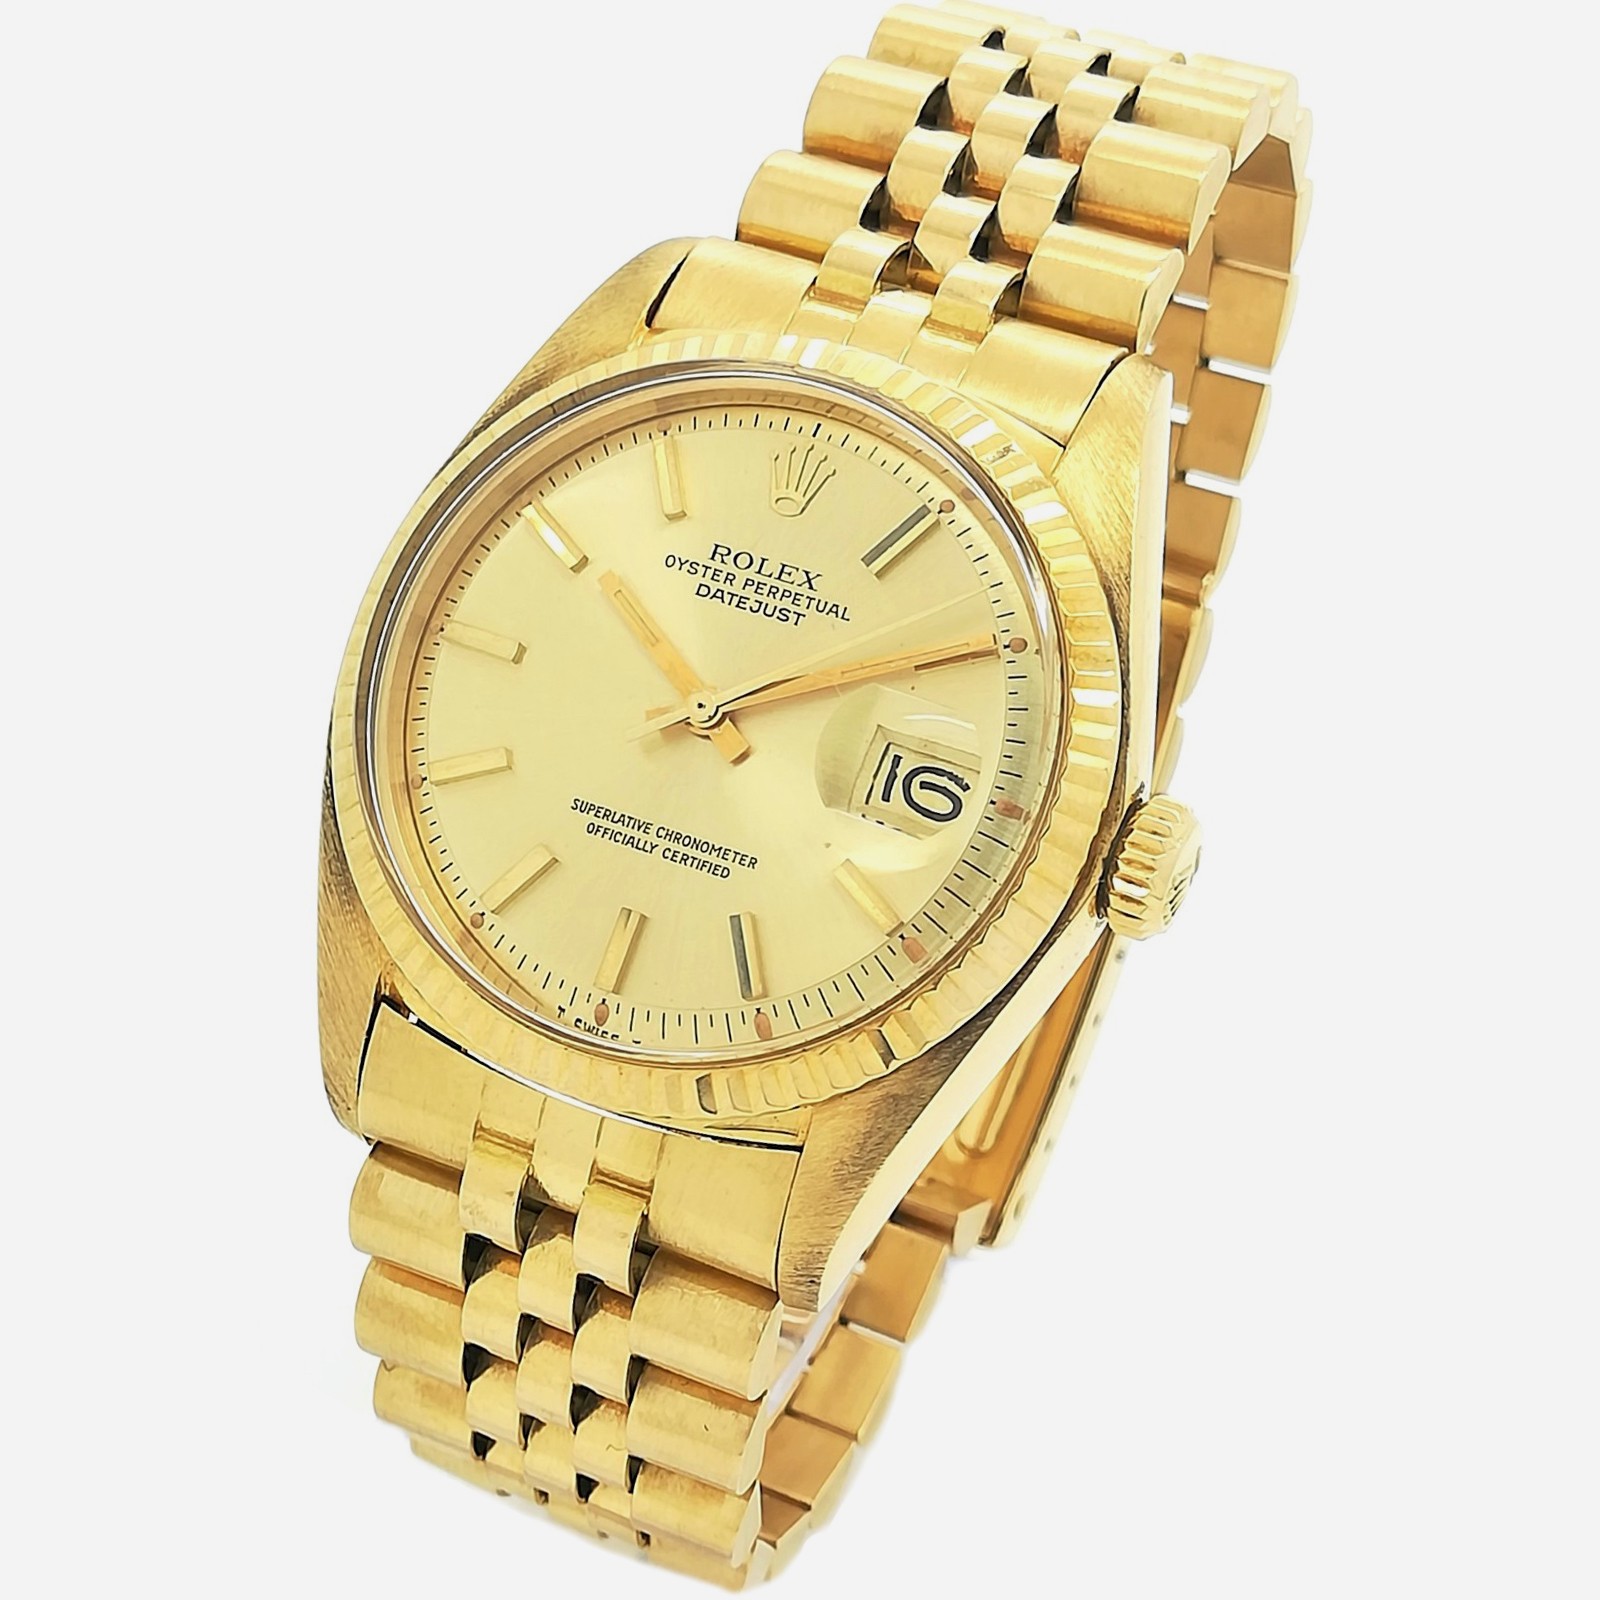 Reloj Automático ROLEX Oyster Perpetual Datejust de Oro Amarillo 18k Cal. 1570 Ref: 1601 año 1976 con estuche